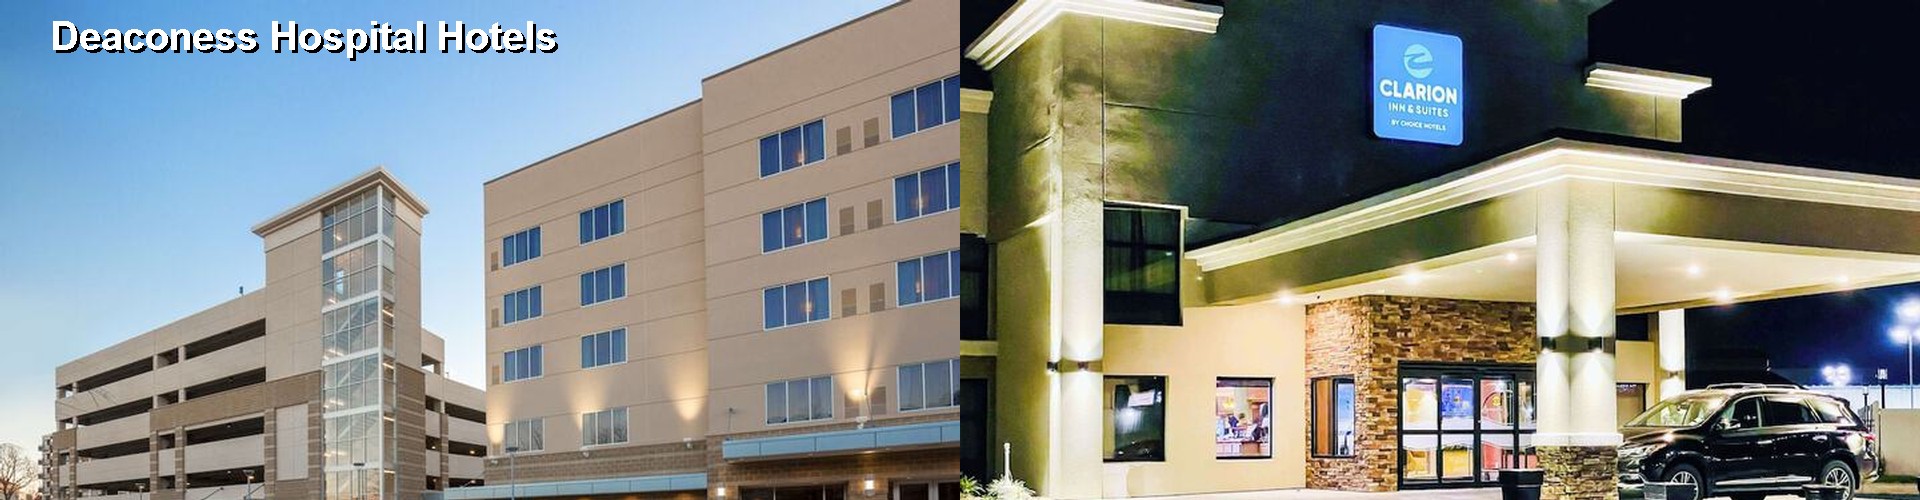 5 Best Hotels near Deaconess Hospital